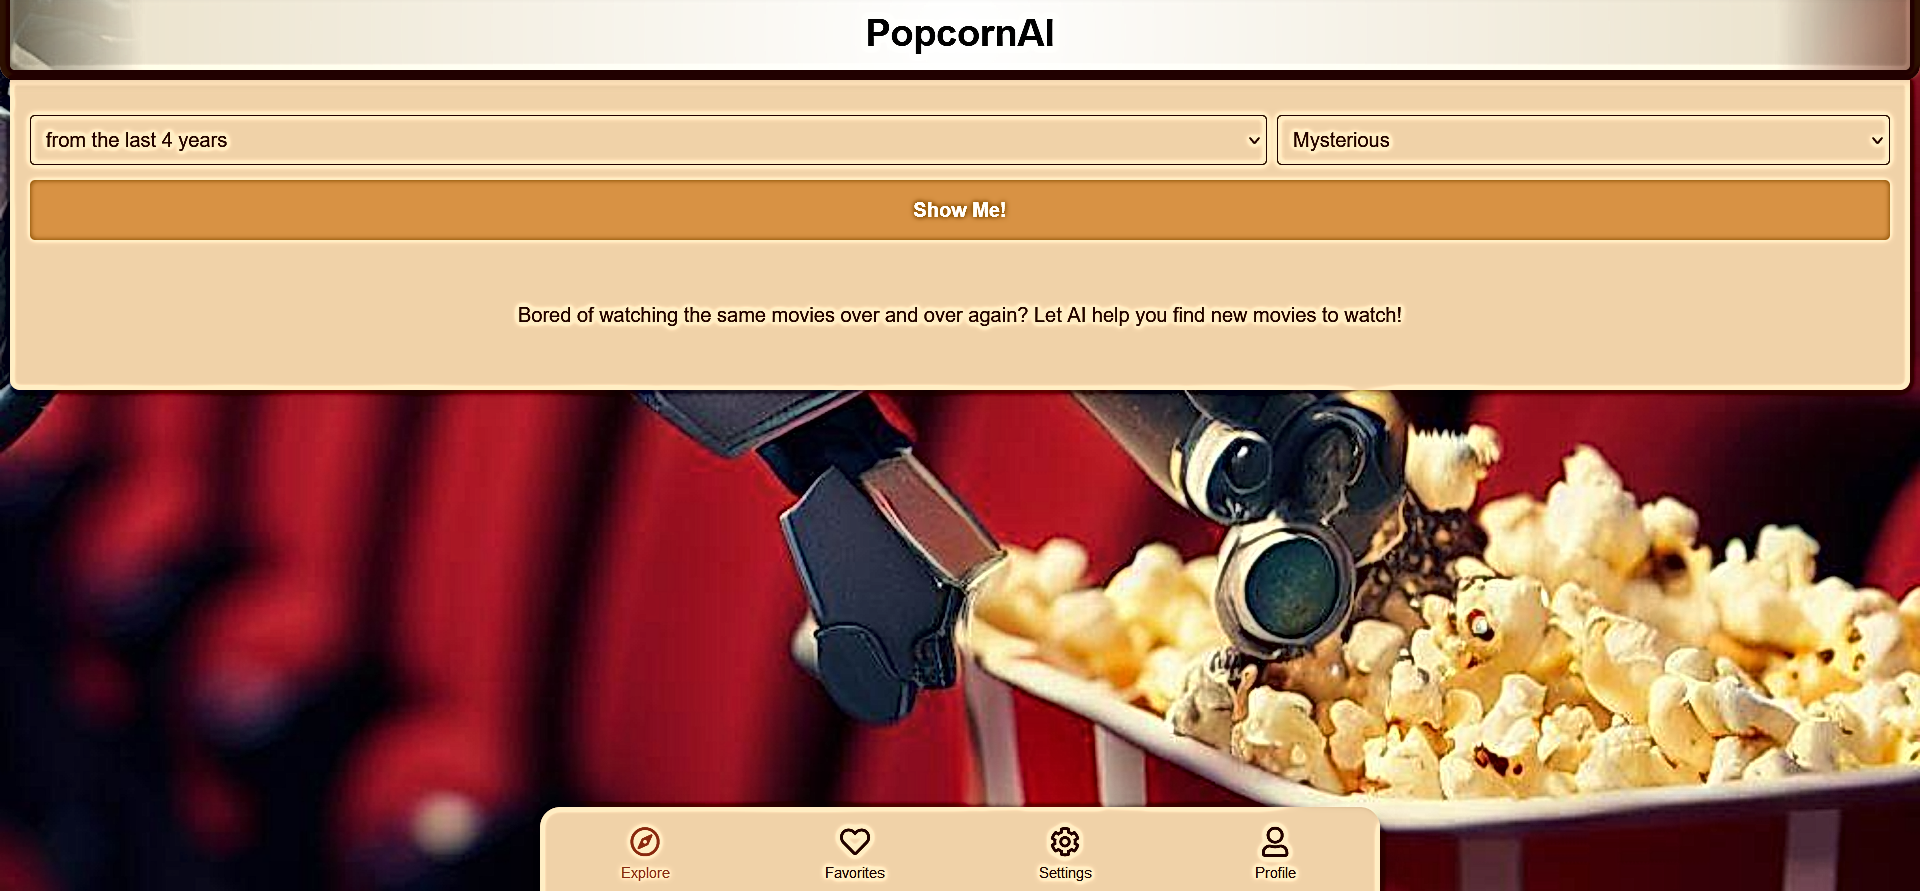 PopcornAI featured